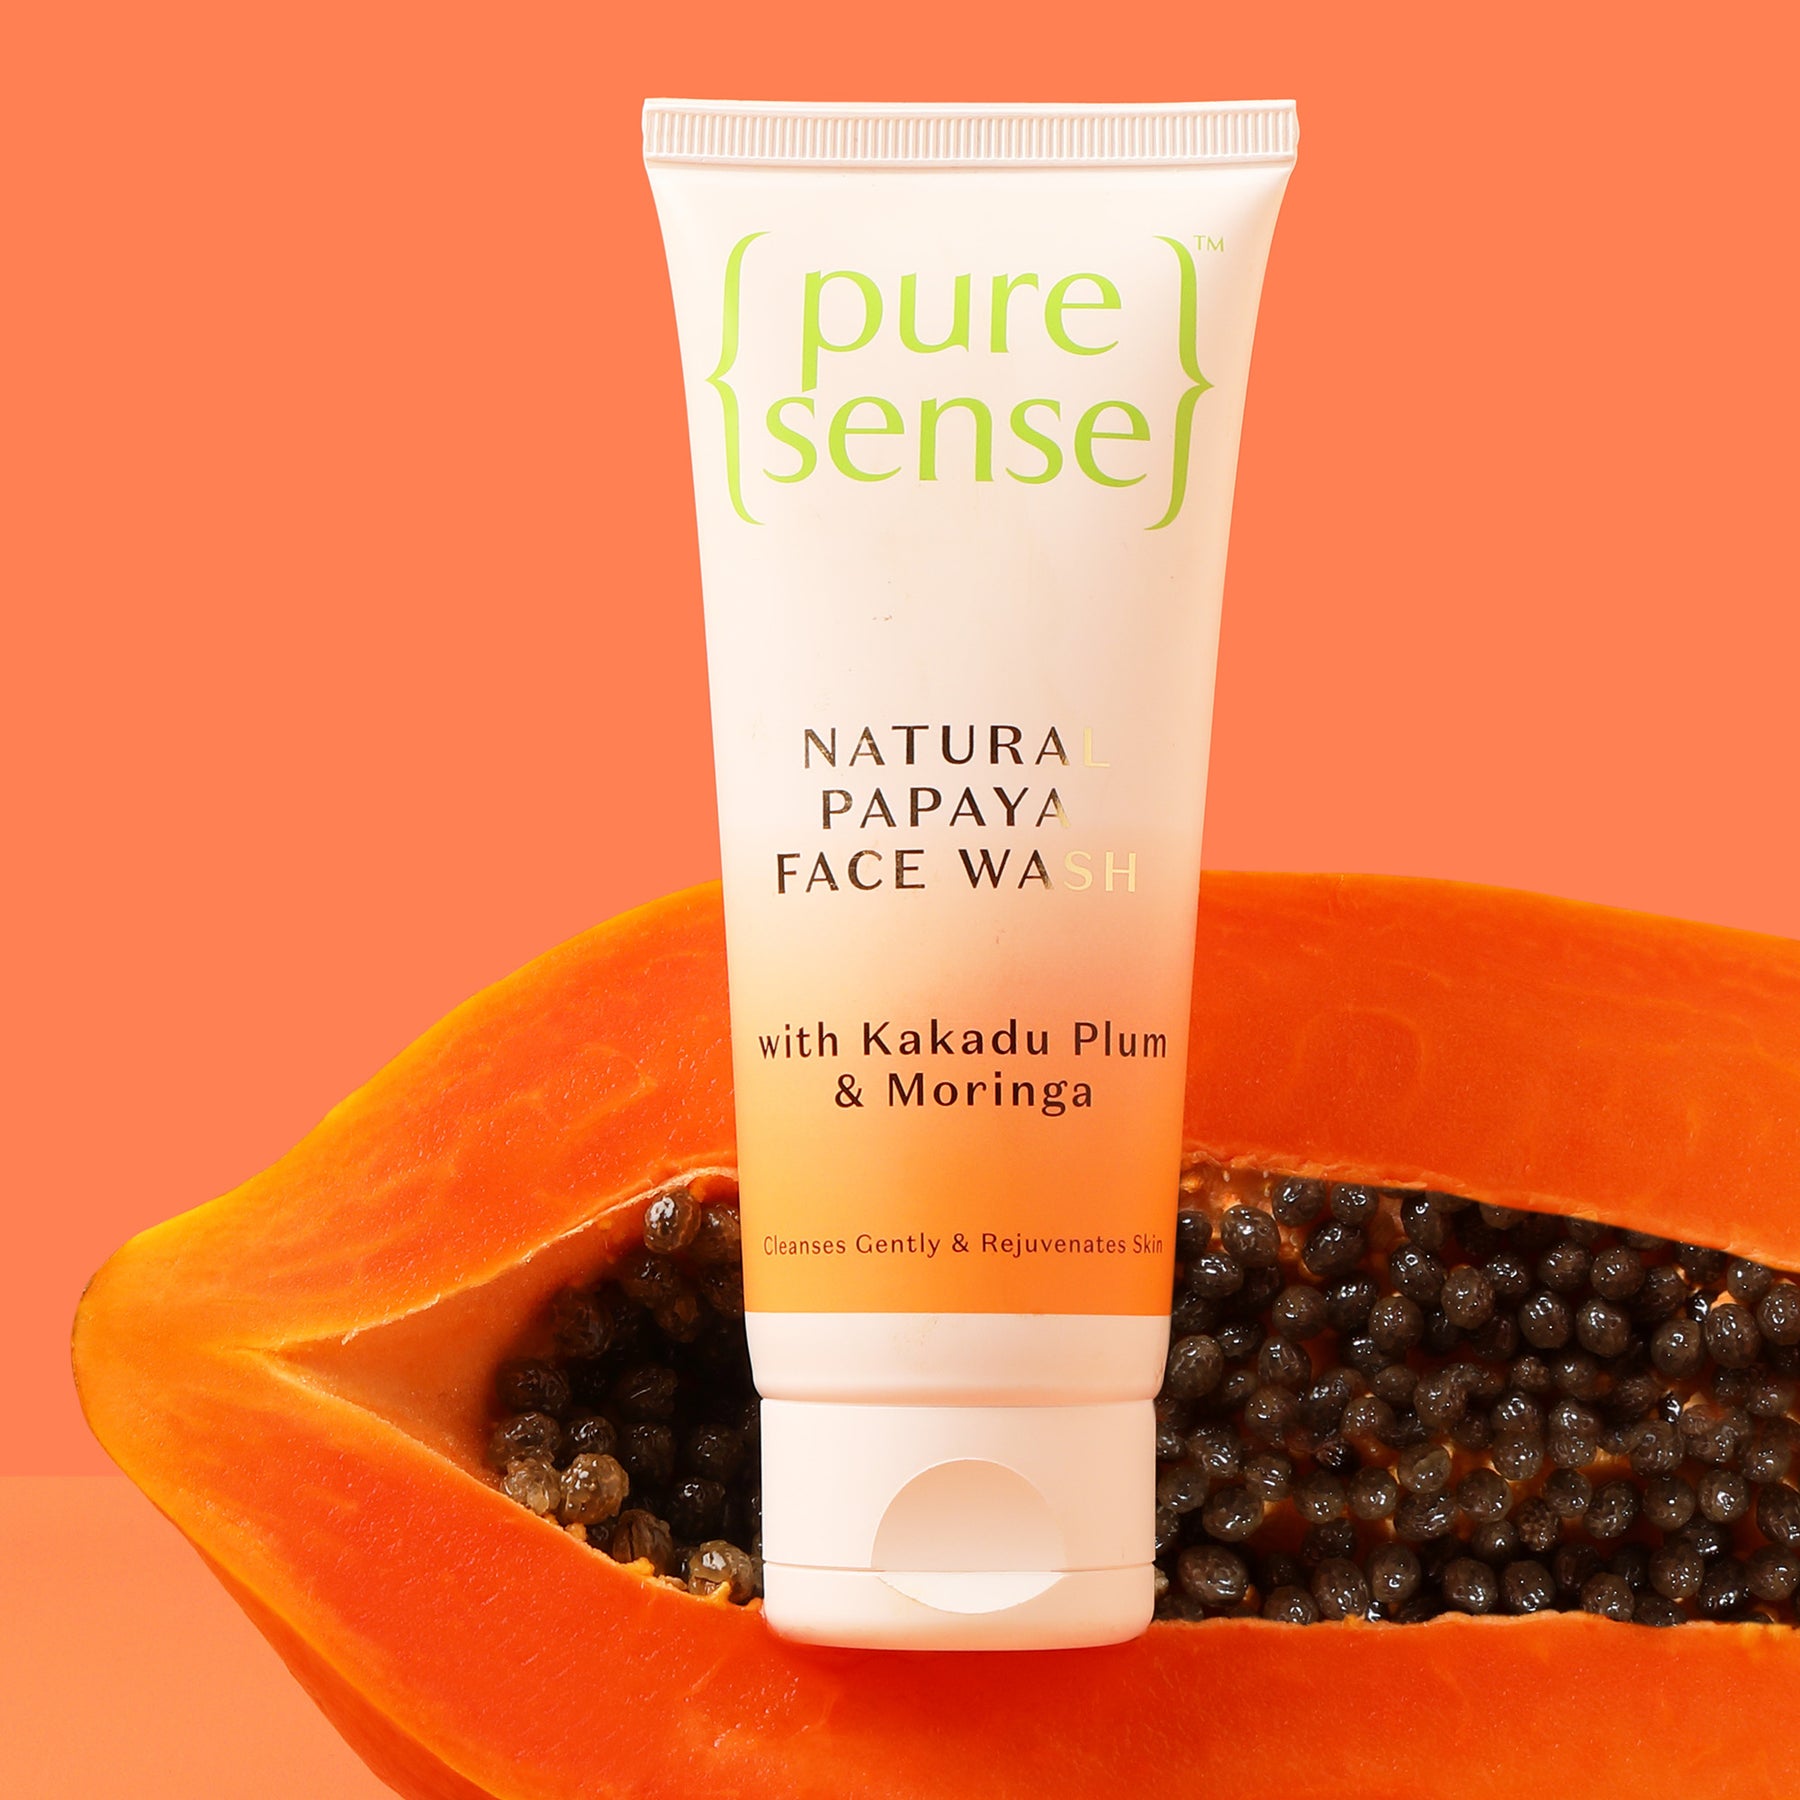 Natural Papaya Face Wash | From the makers of Parachute Advansed | 100ml